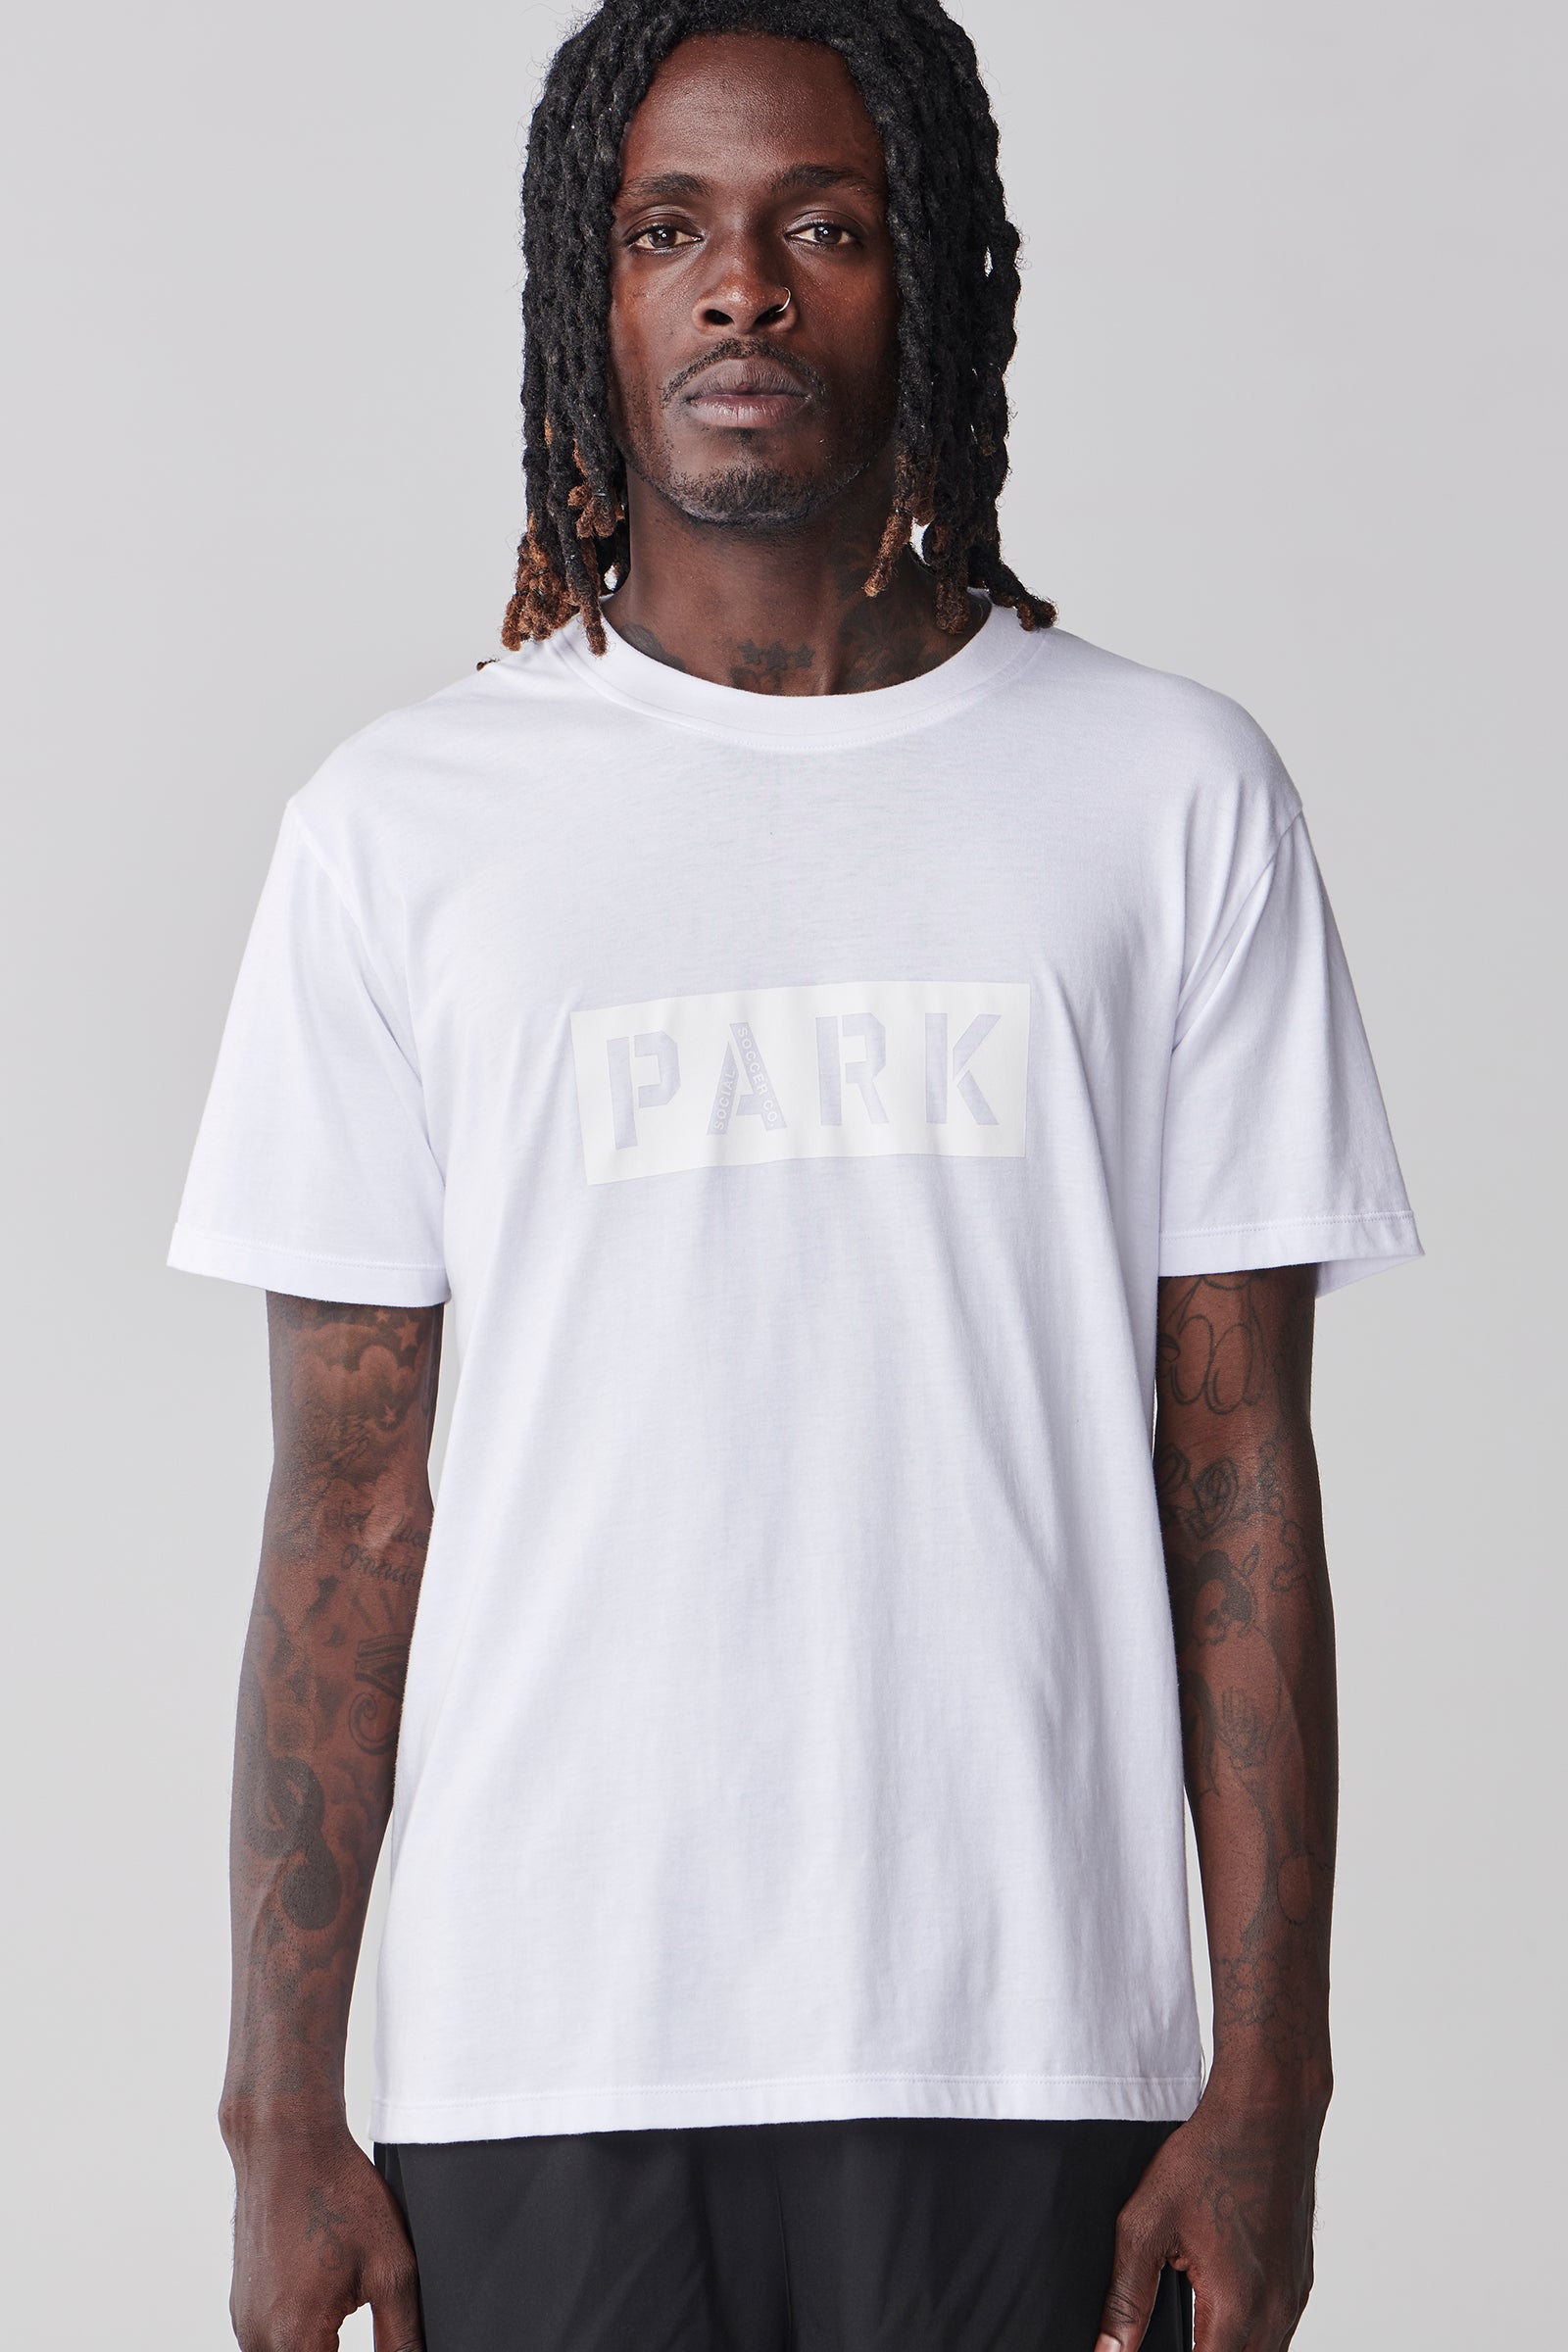 PARK T Shirt - White